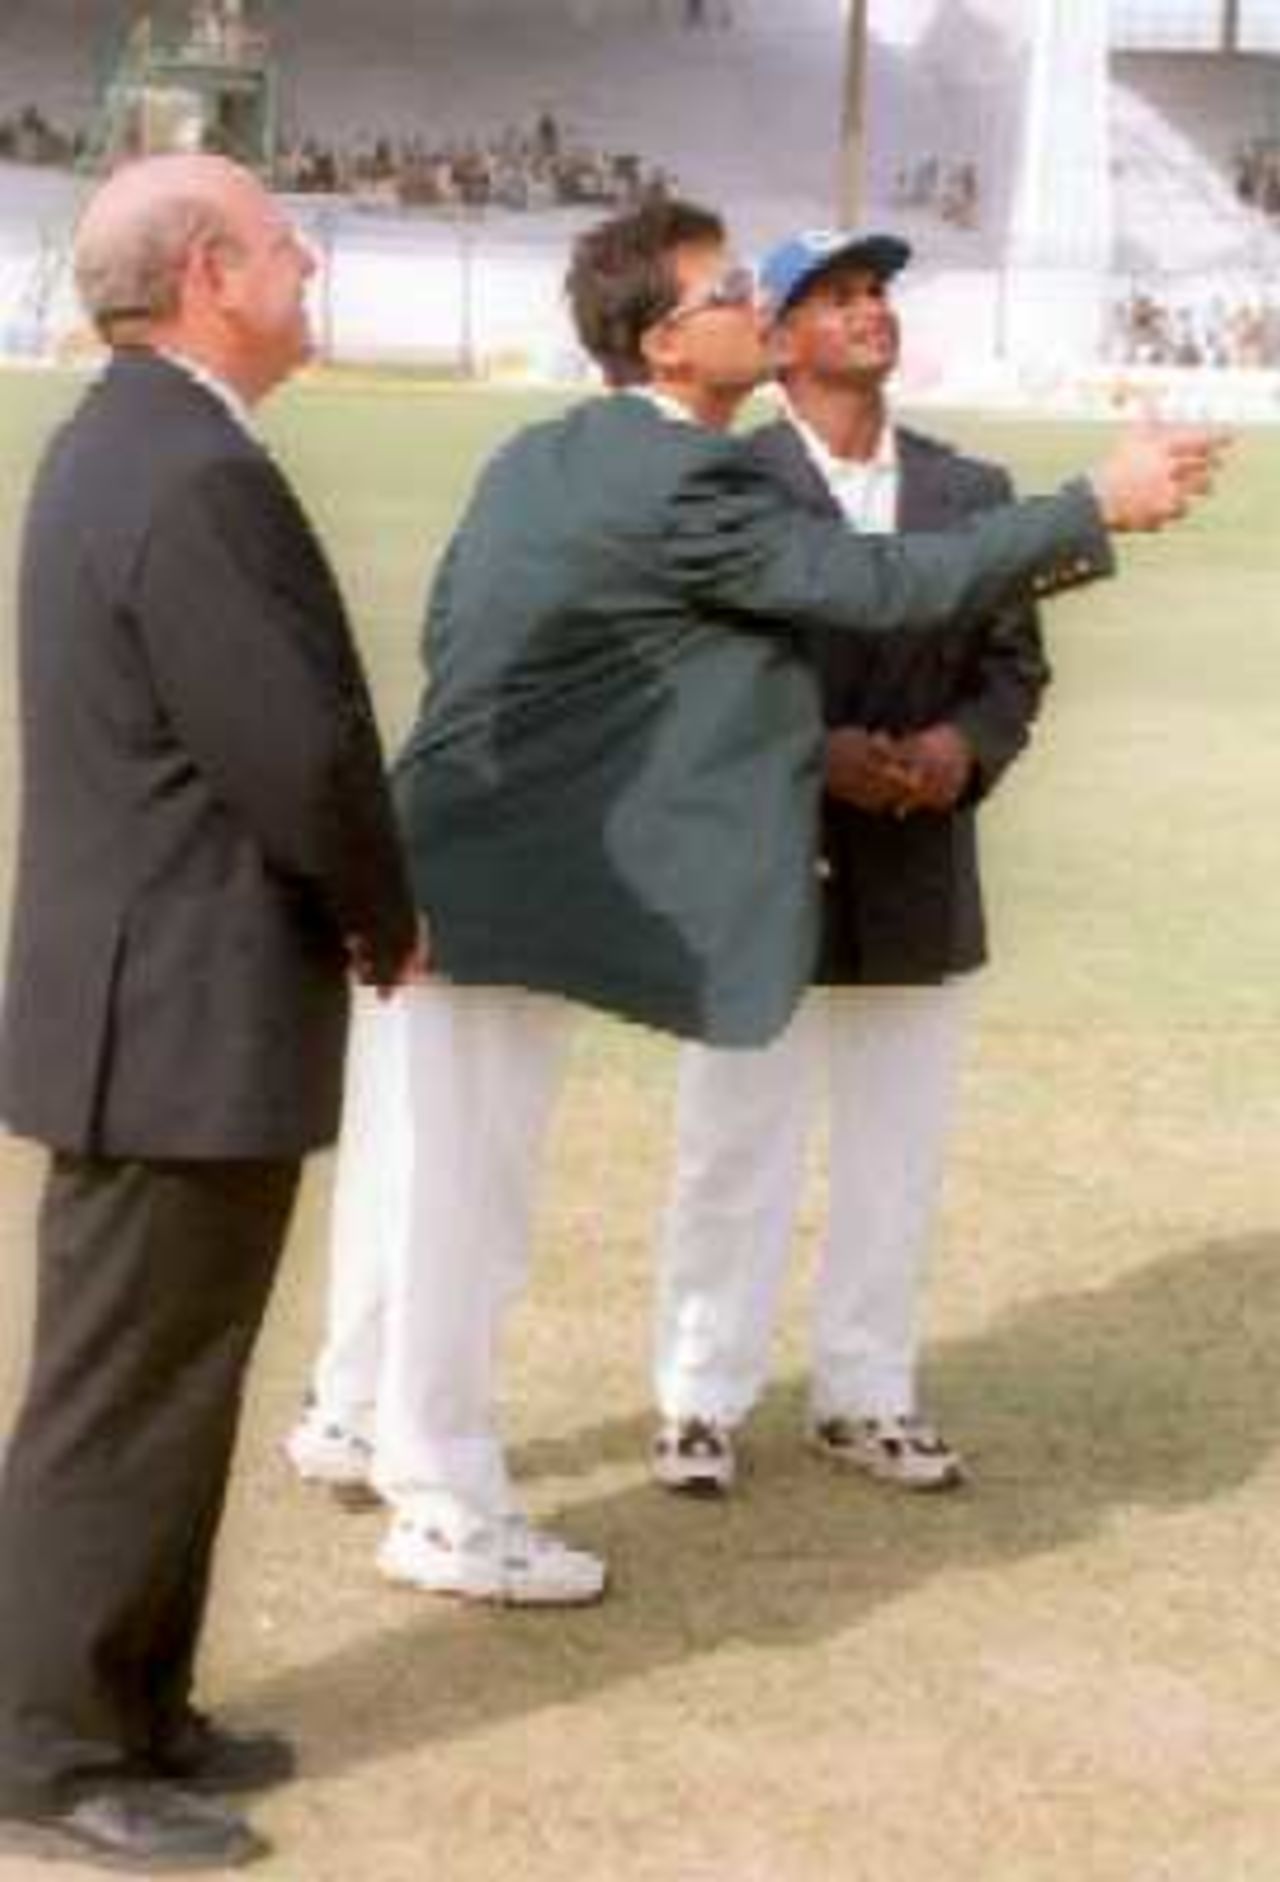 Pakistan's stand-in captain Moin Khan spins the coin before the start of the 3rd Test against Sri Lanka, Match referee Brian Hastings and Sri Lankan skipper Jayasuriya also seen, Pakistan v Sri Lanka, 3rd Test at Karachi, 12-16 March 2000